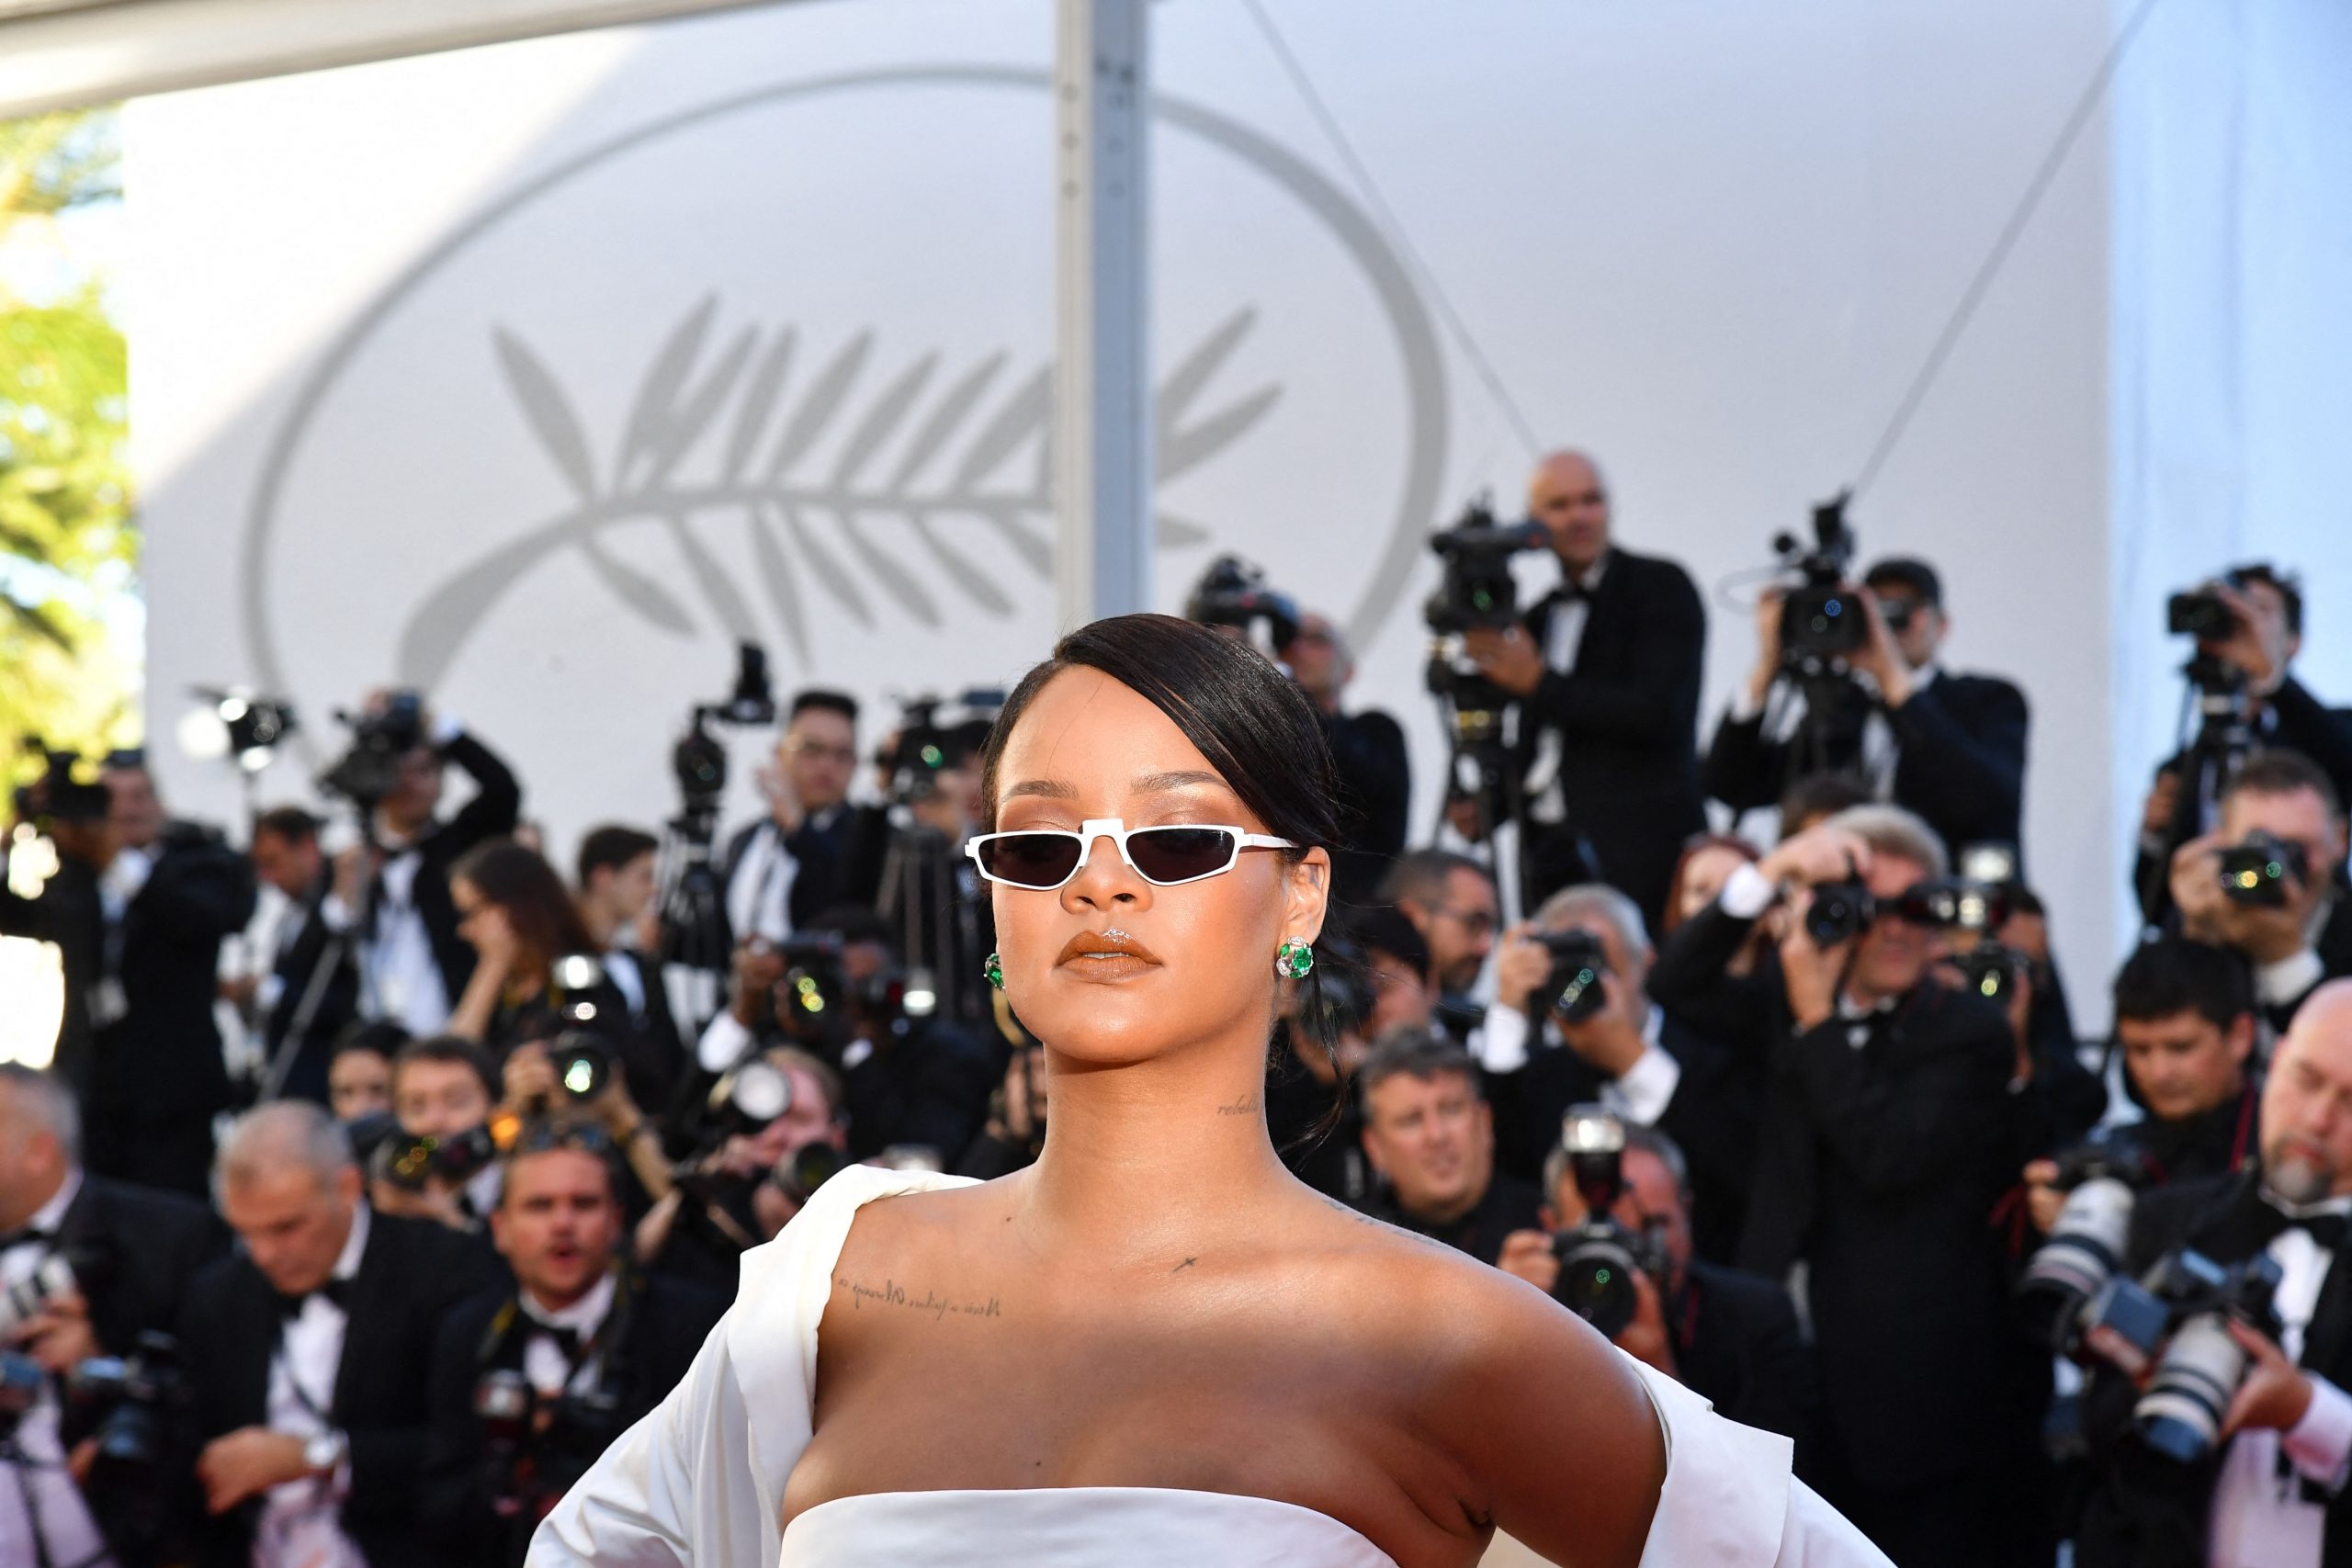 Rihanna birthday: See the singer’s most stunning looks